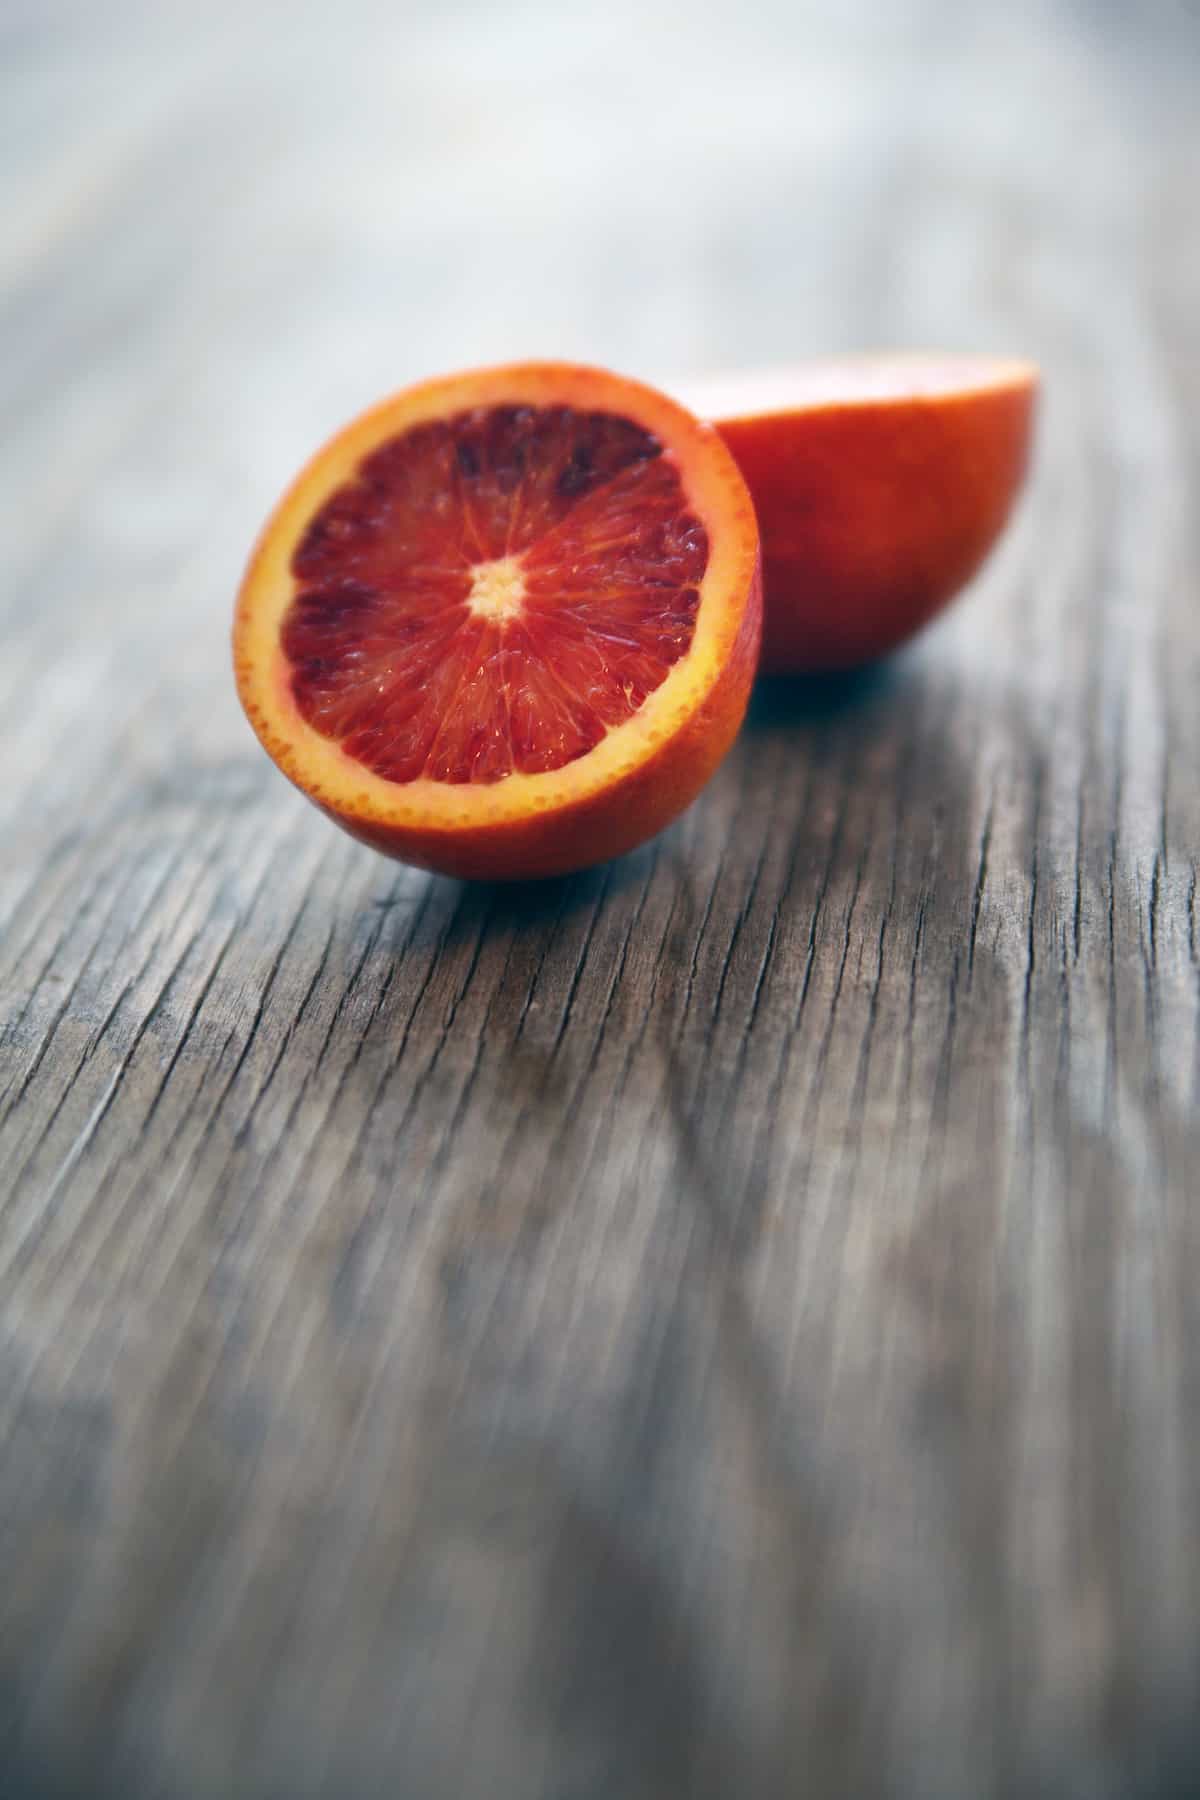 halved blood orange on a wooden table.